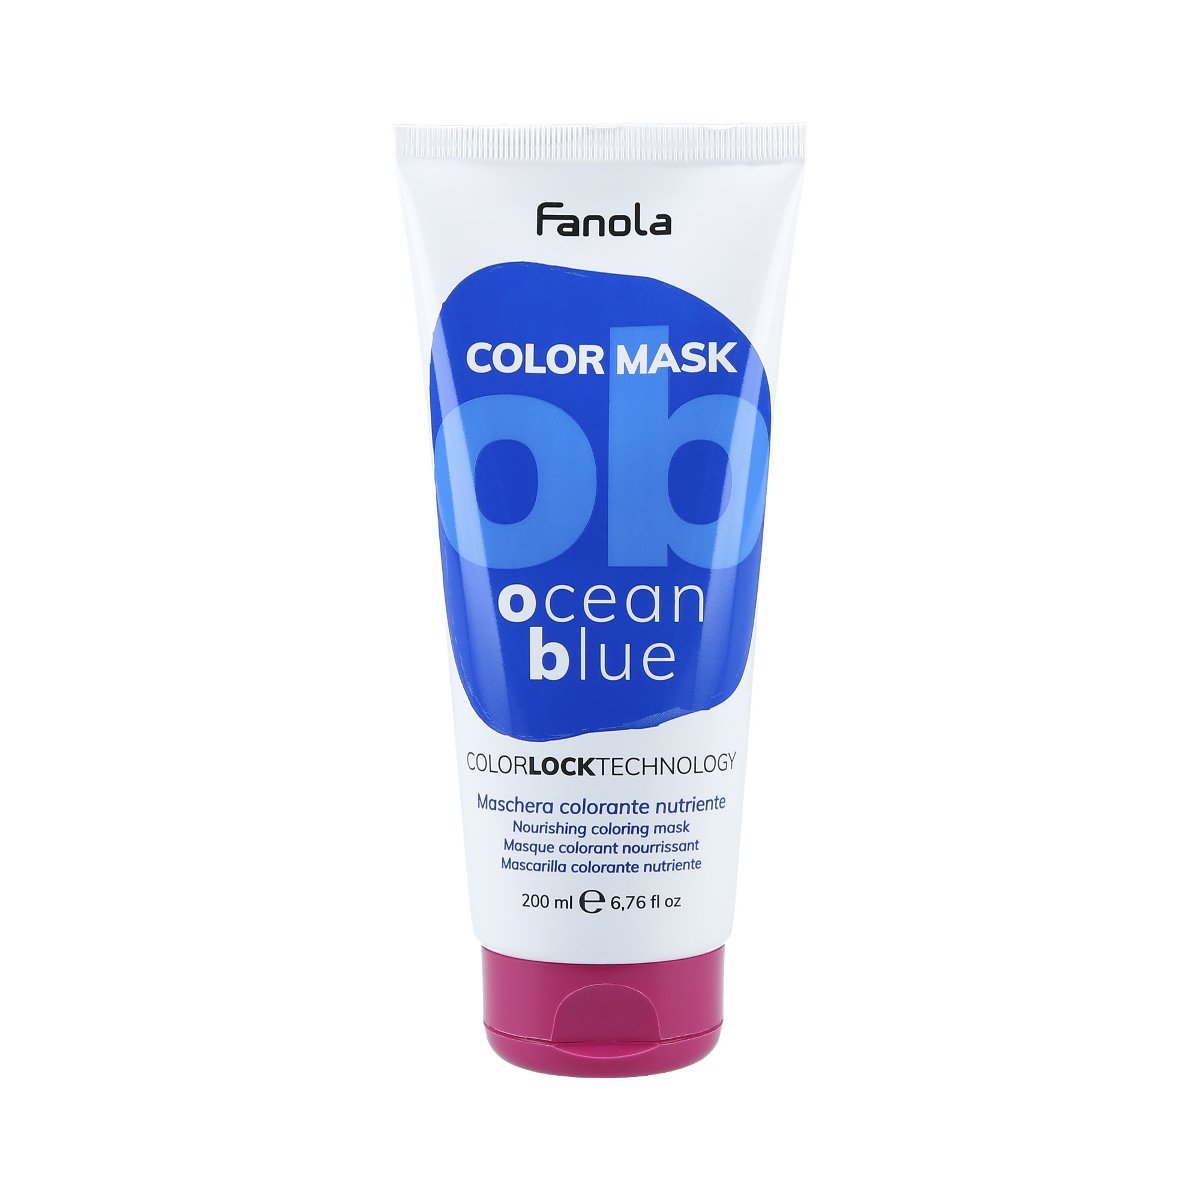 Fanola Color Mask, maska koloryzująca, 200ml, Ocean Blue